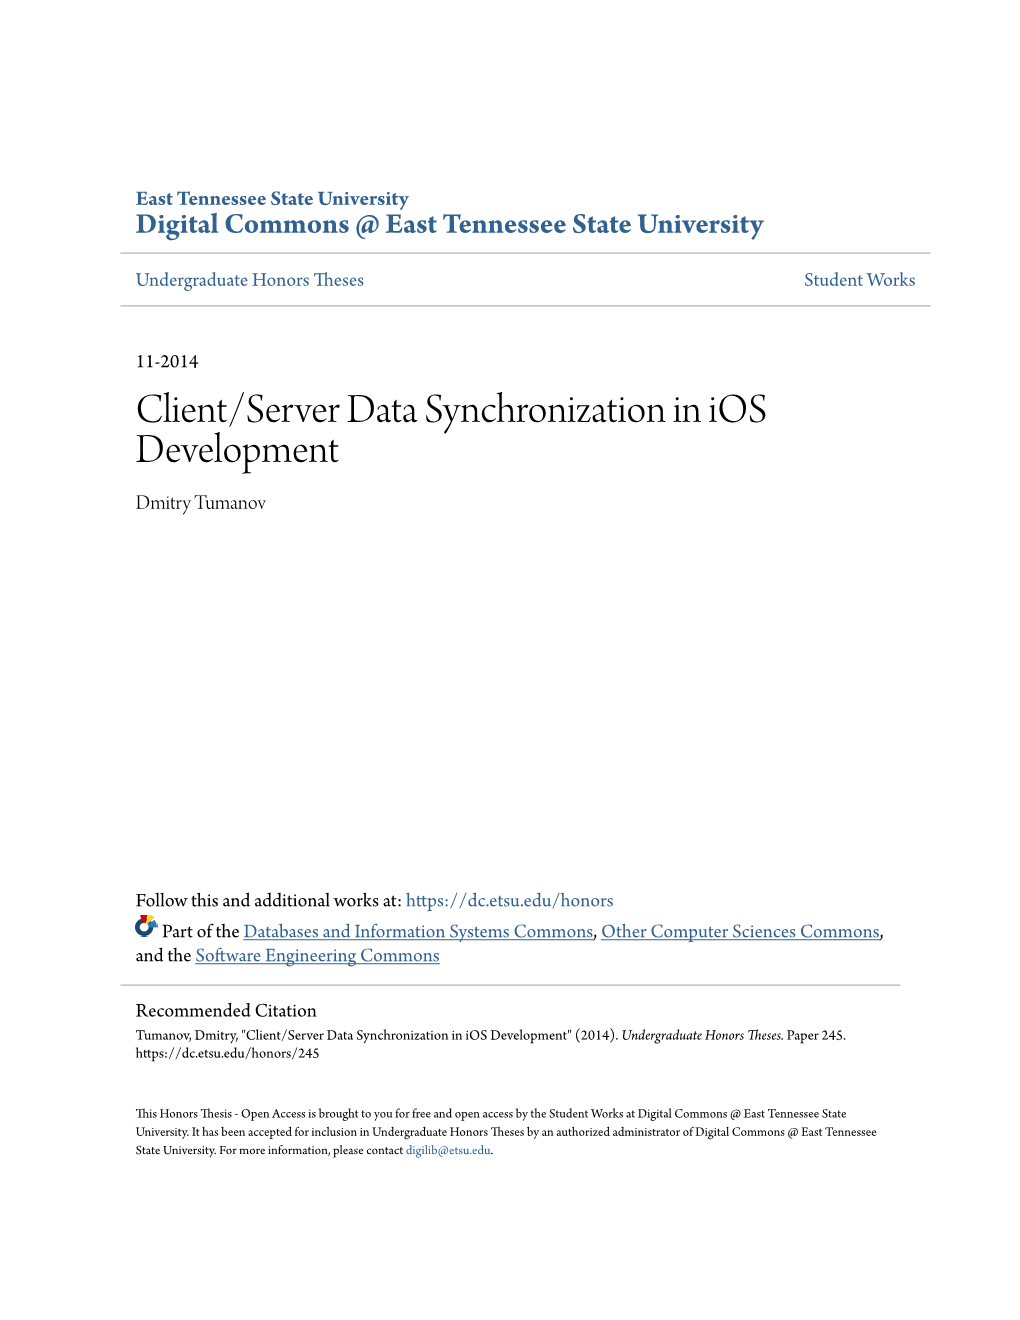 Client/Server Data Synchronization in Ios Development Dmitry Tumanov